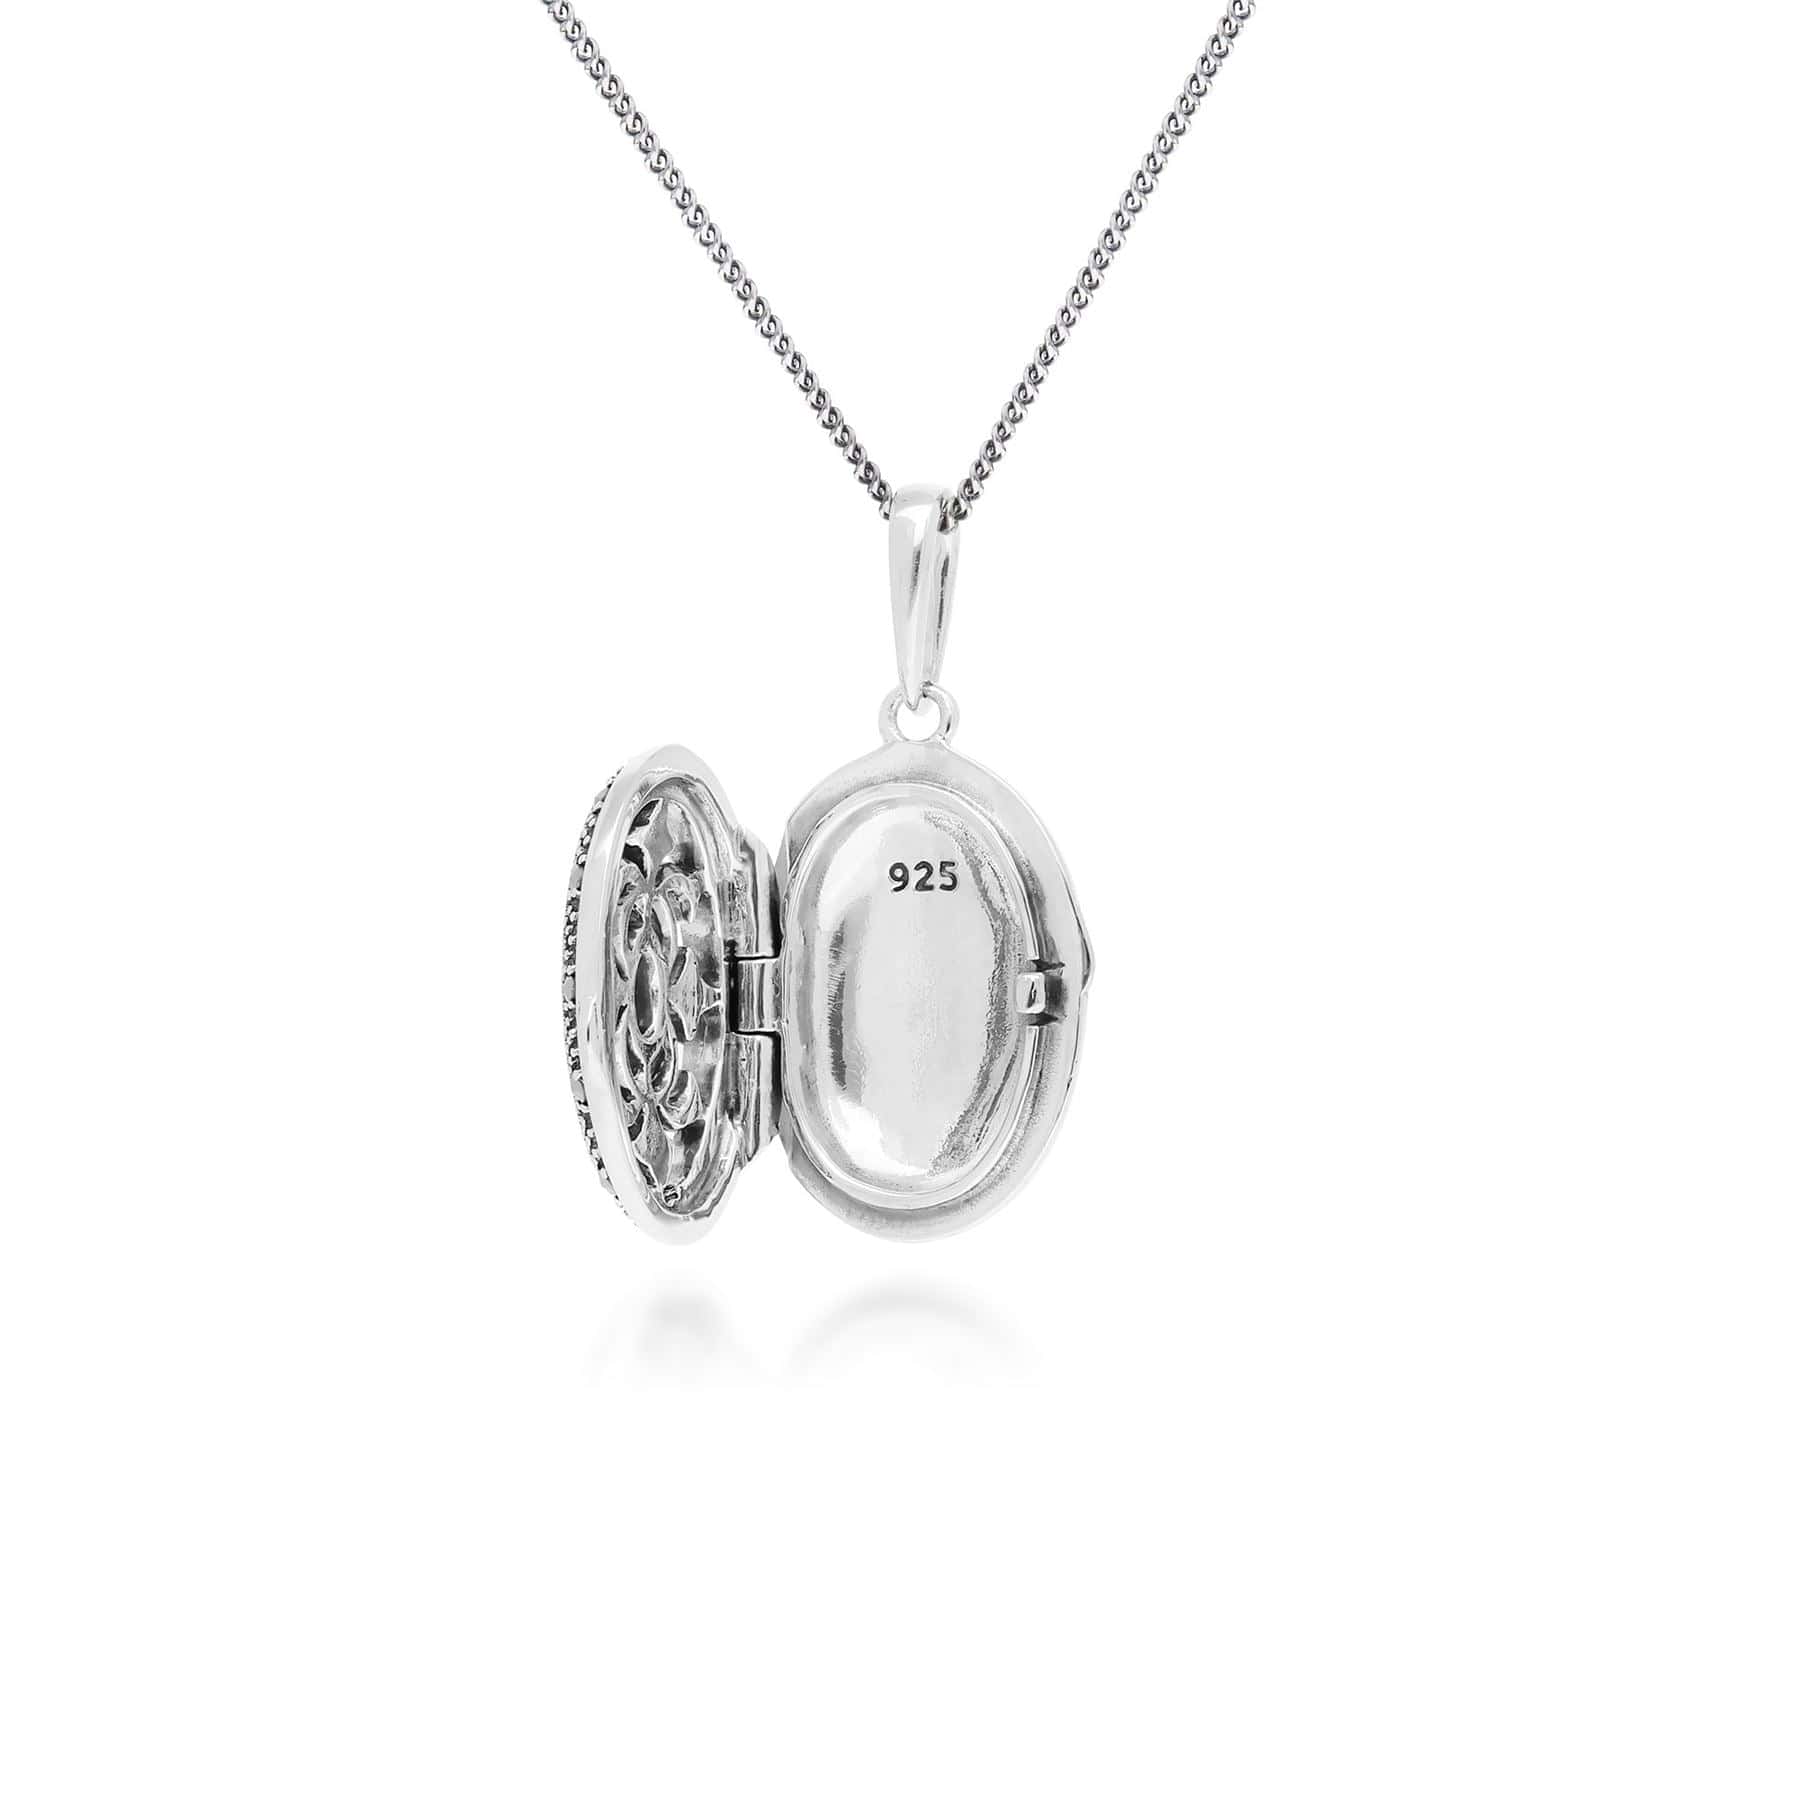 214N716205925 Art Nouveau Style Oval Amethyst & Marcasite Locket Necklace in 925 Sterling Silver 3